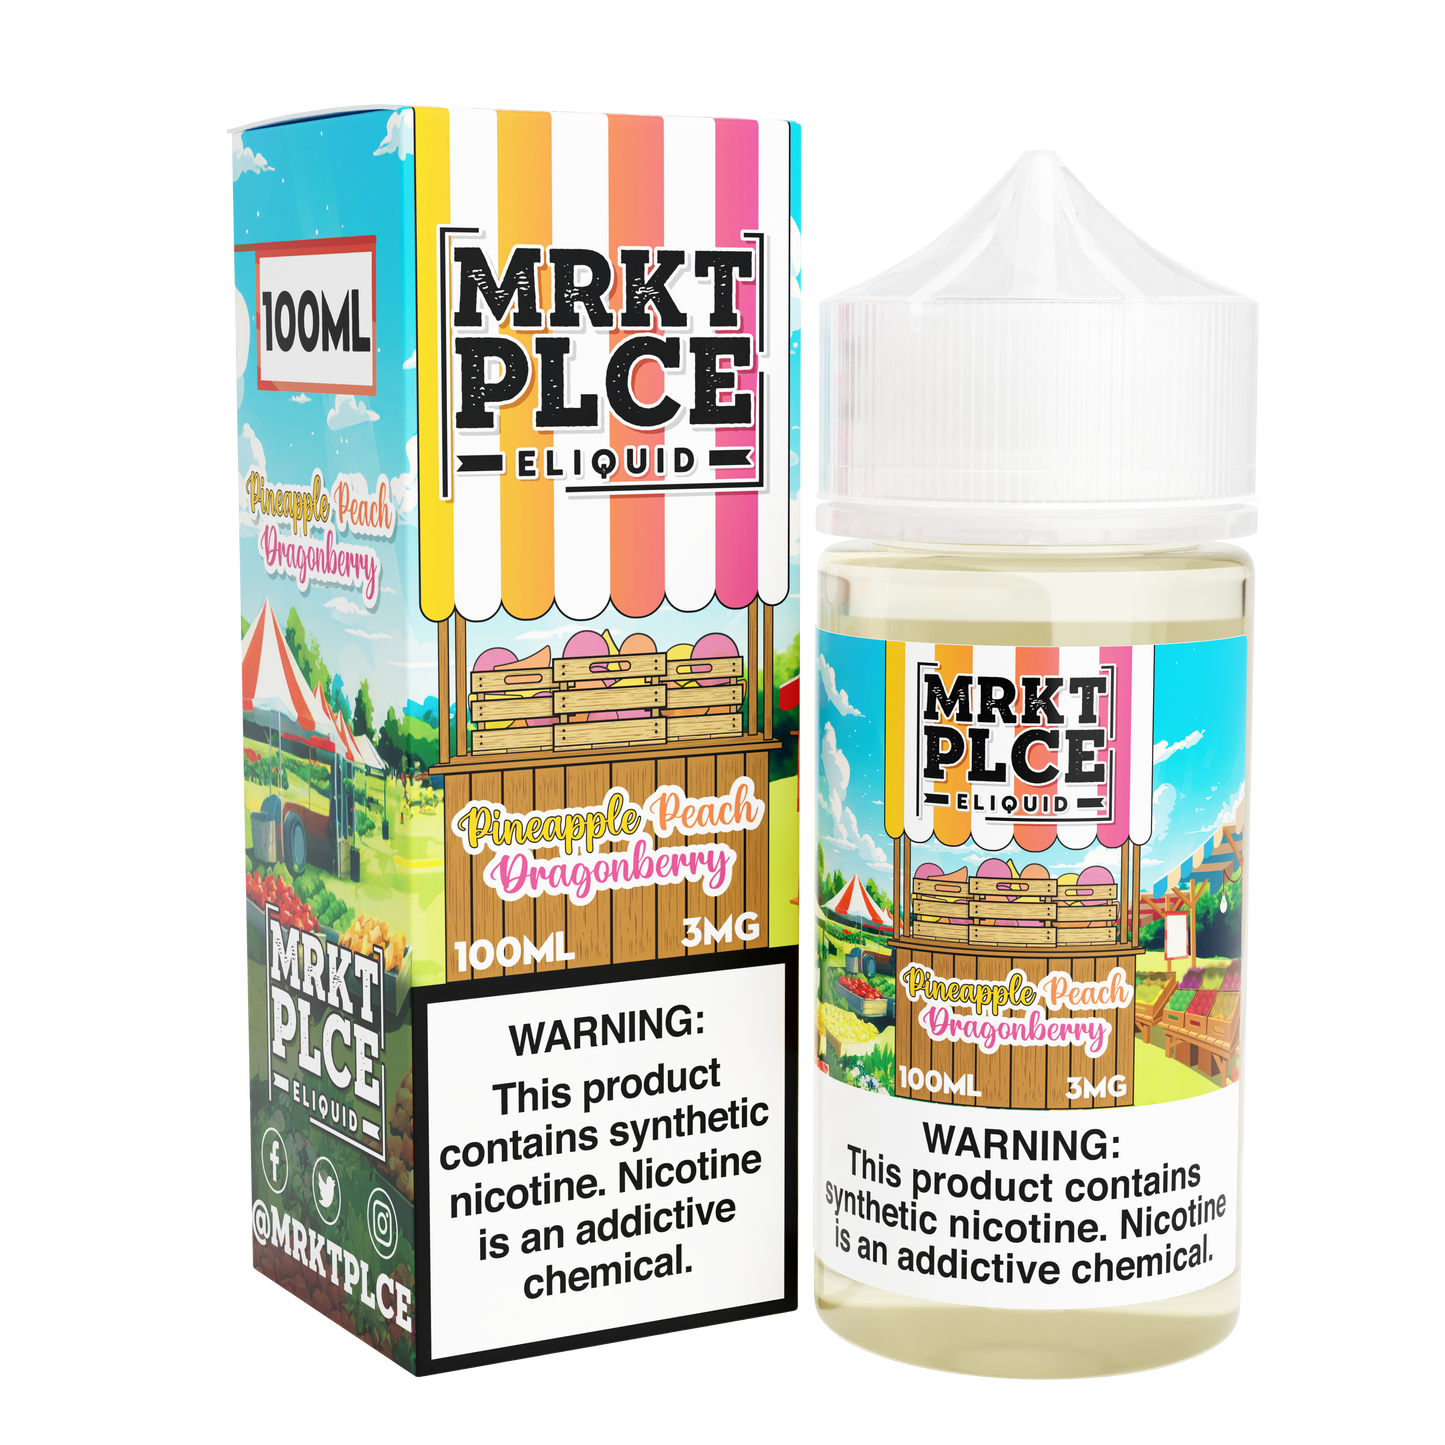 MRKT PLCE Series E-Liquid 100mL (Freebase) | Pineapple Peach Dragonberry with packaging